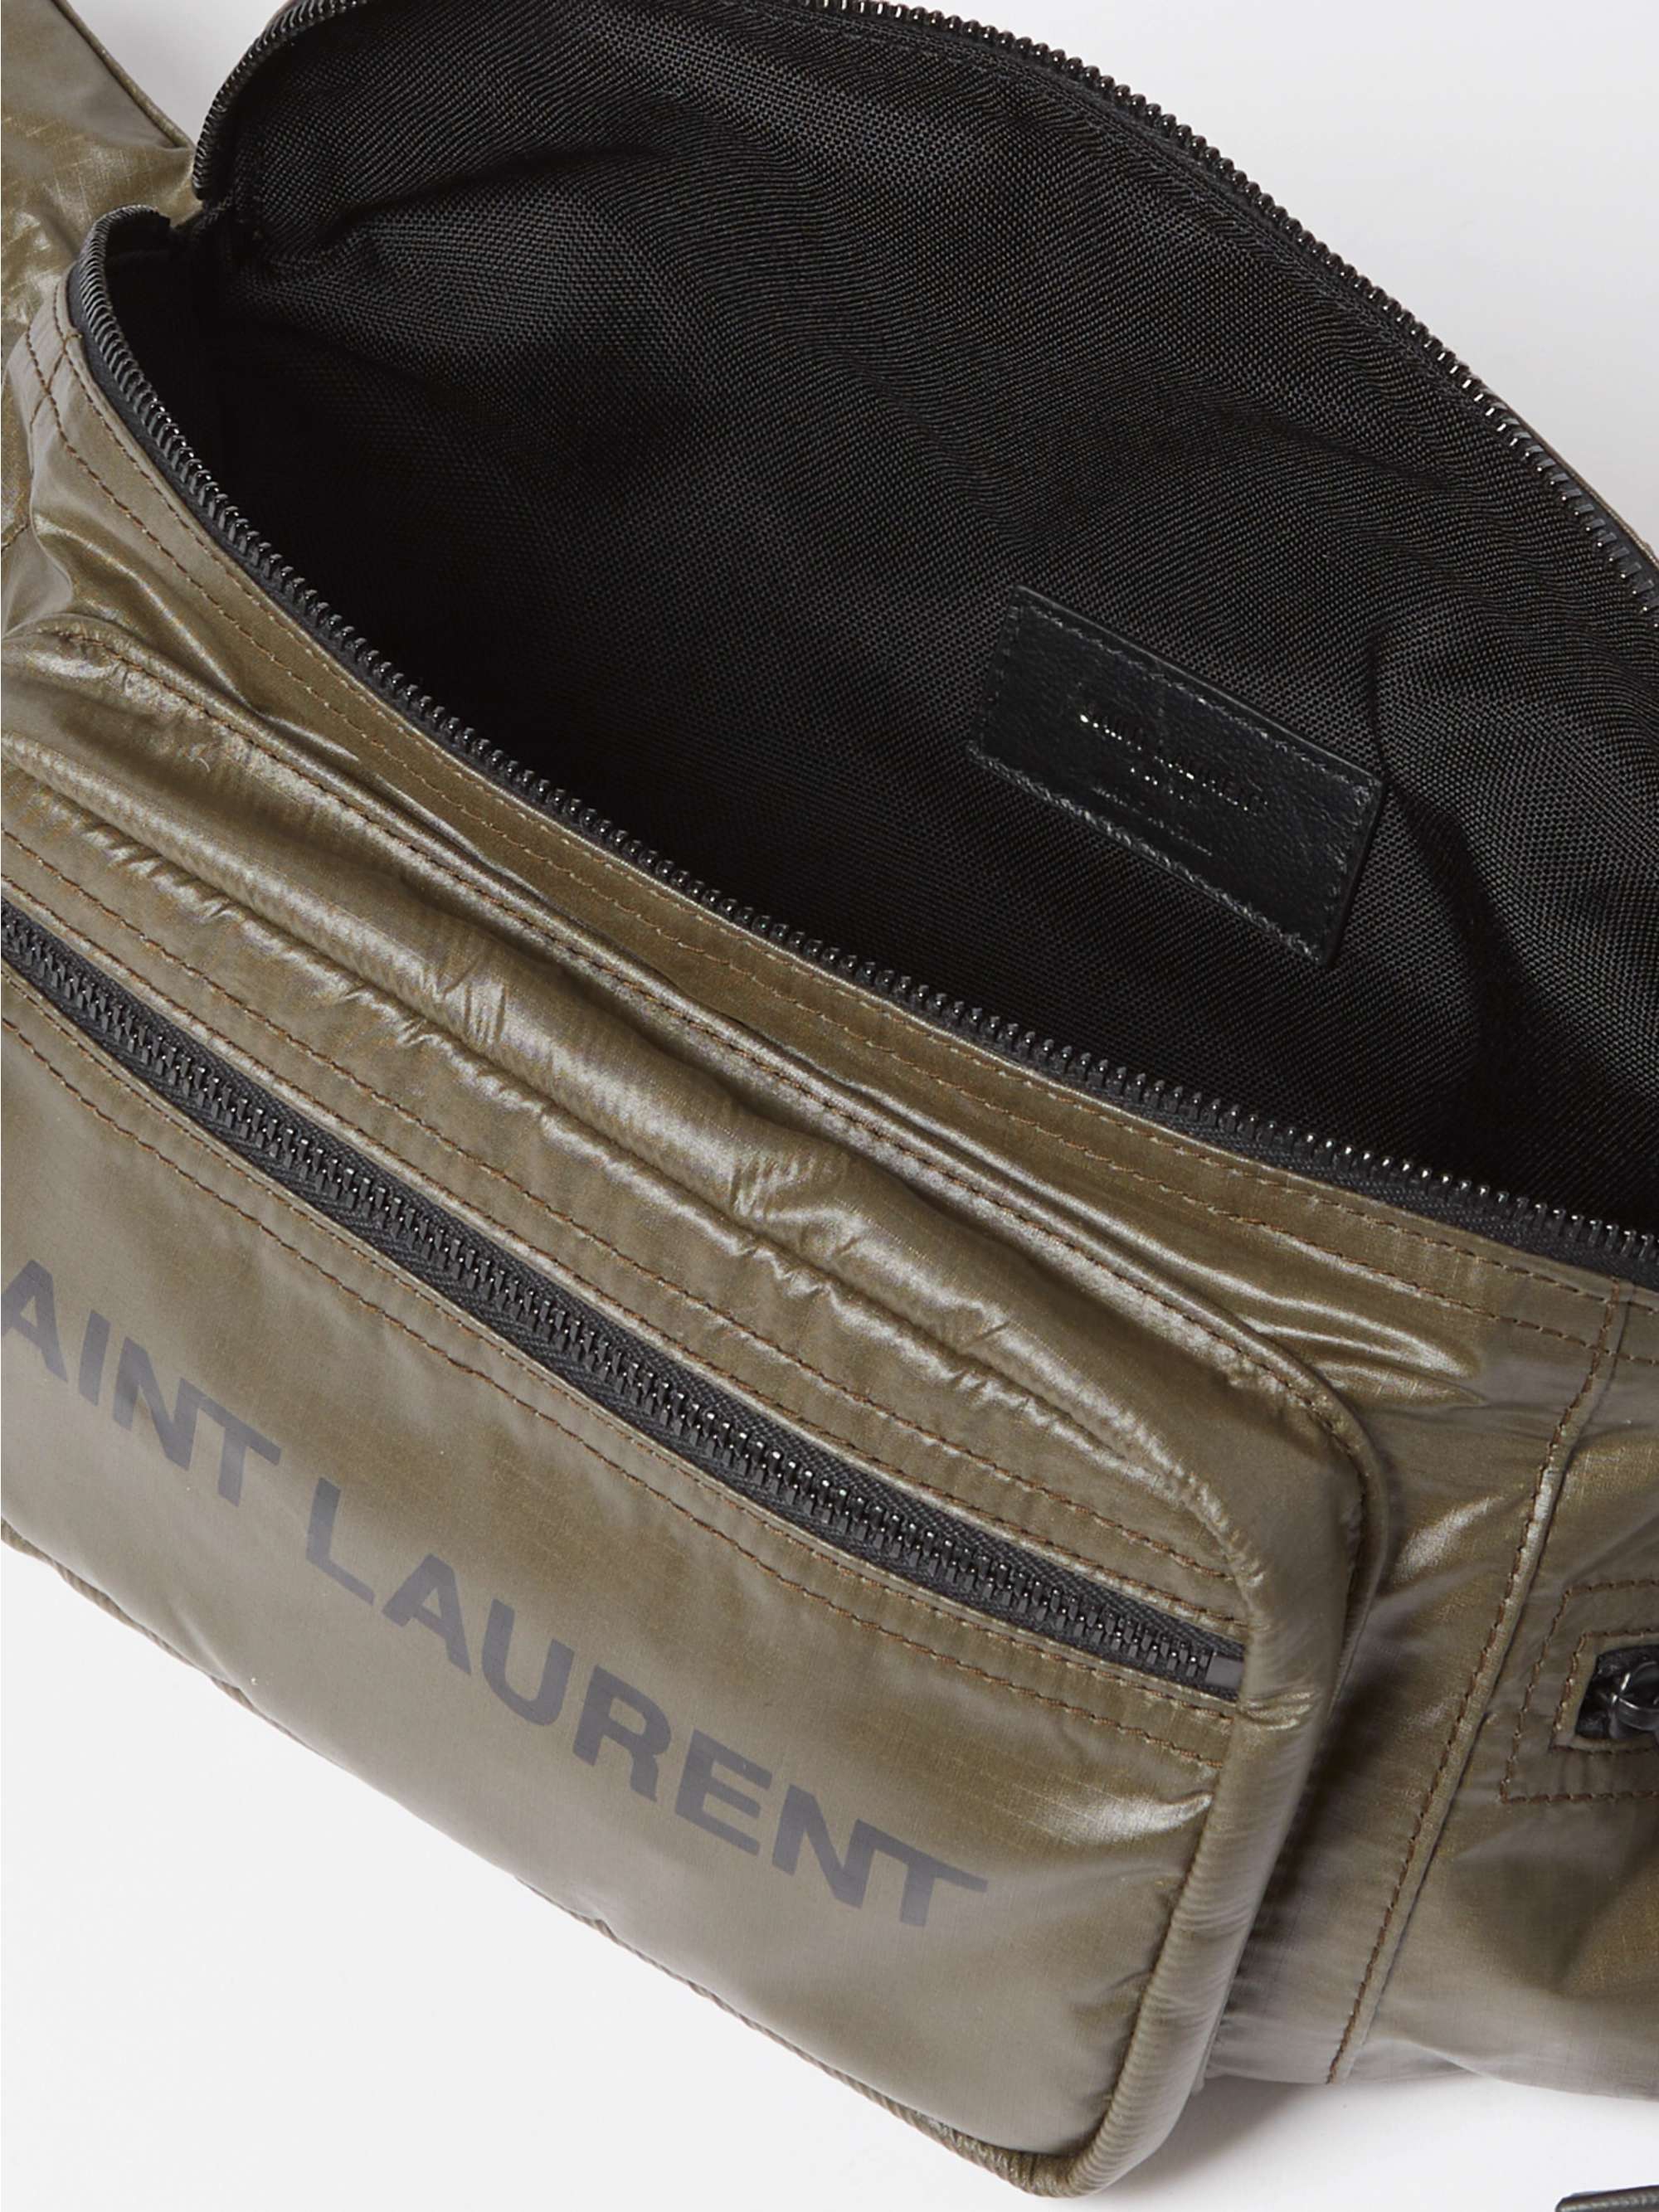 SAINT LAURENT Nuxx Logo-Print Nylon-Ripstop Belt Bag